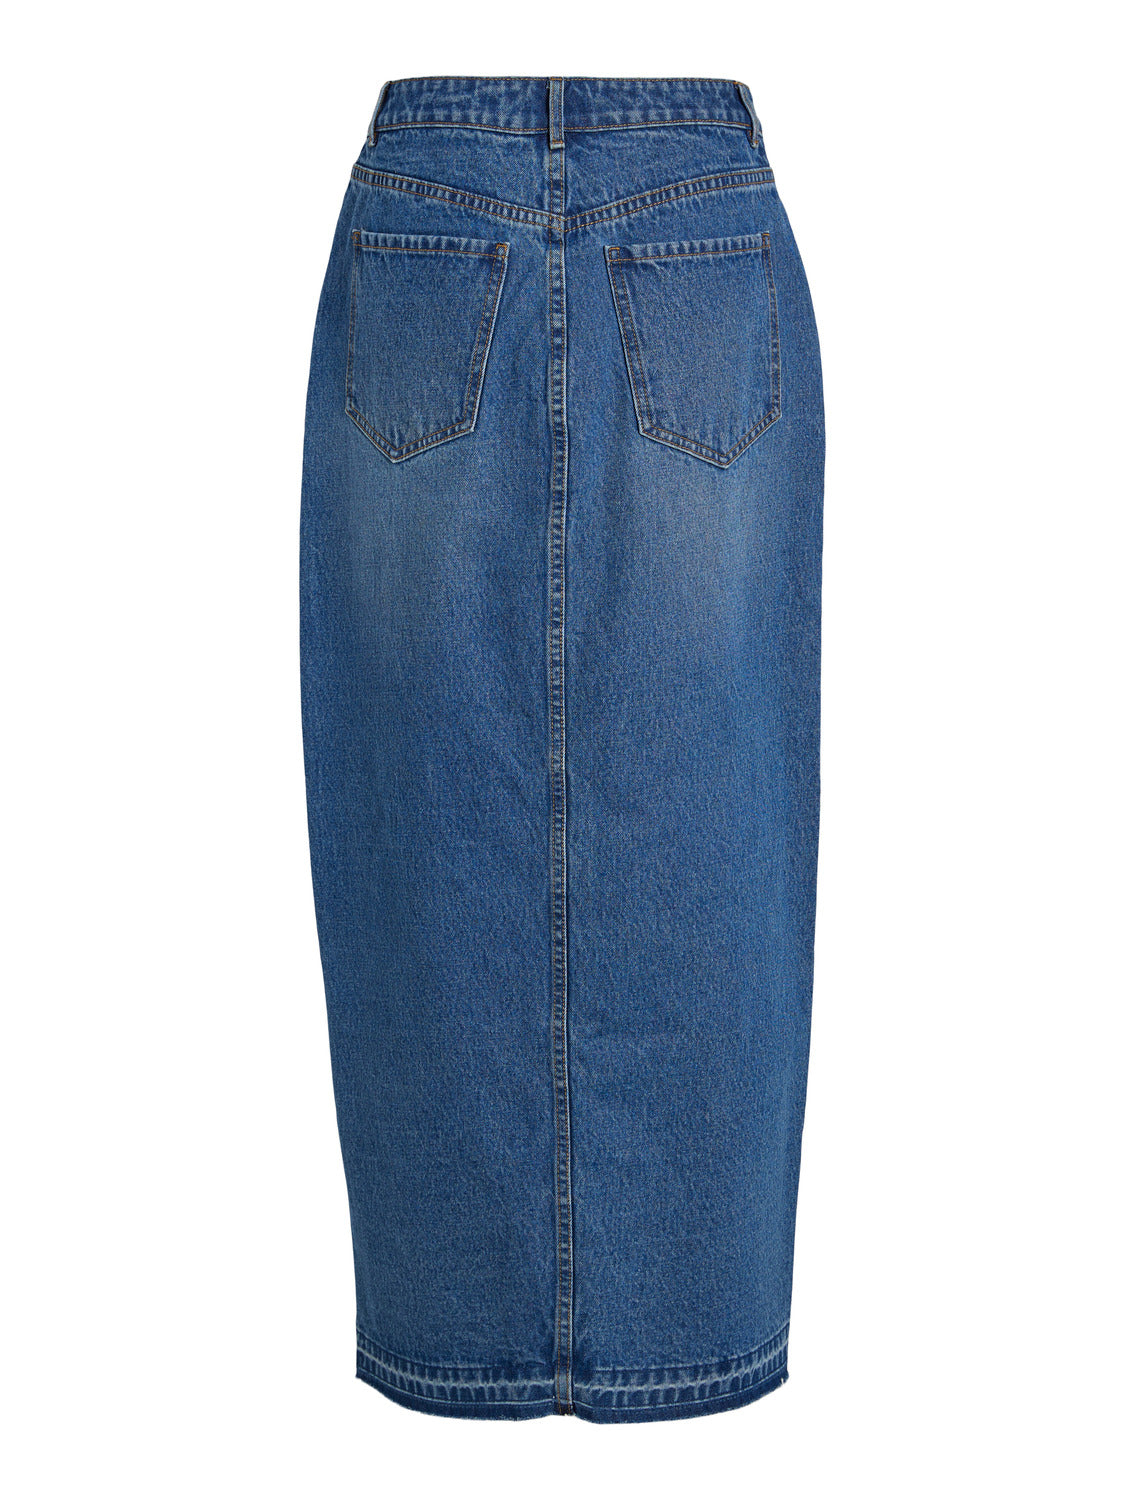 VINETE Skirt - Medium Blue Denim